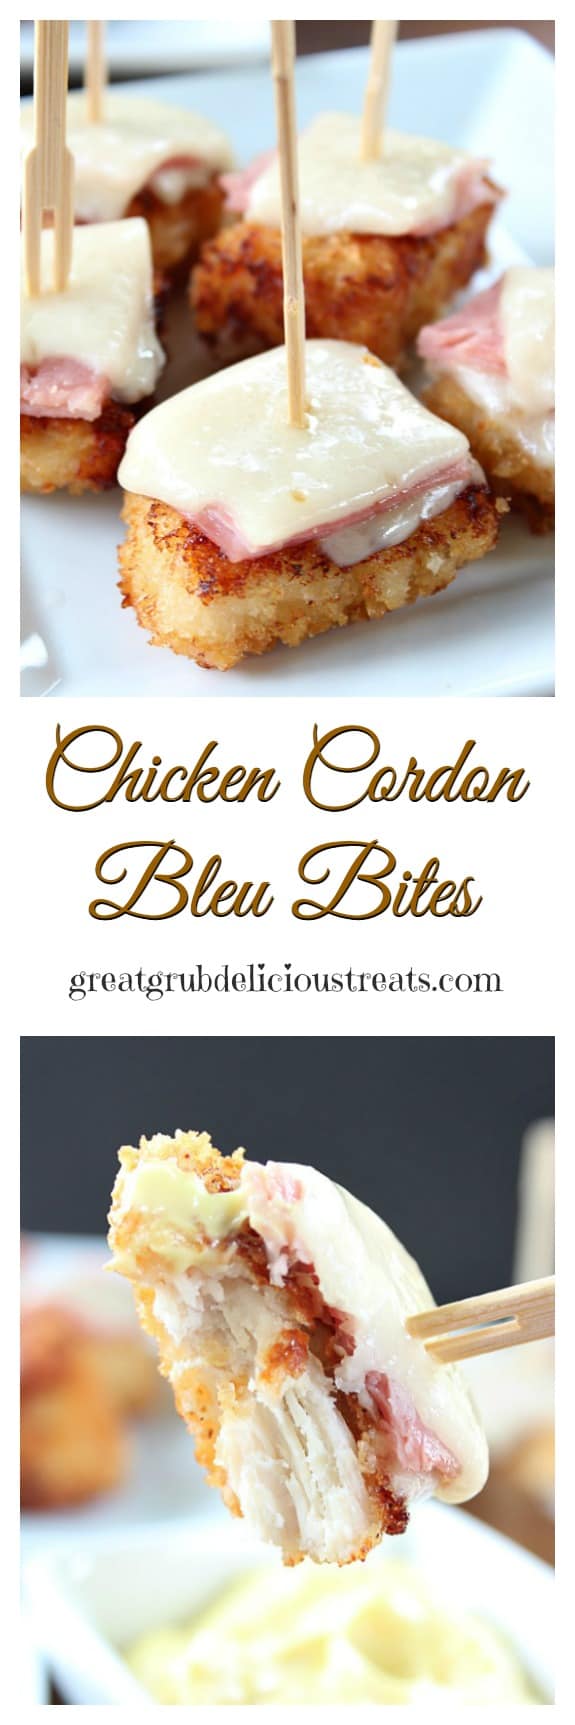 Chicken Cordon Bleu Bites